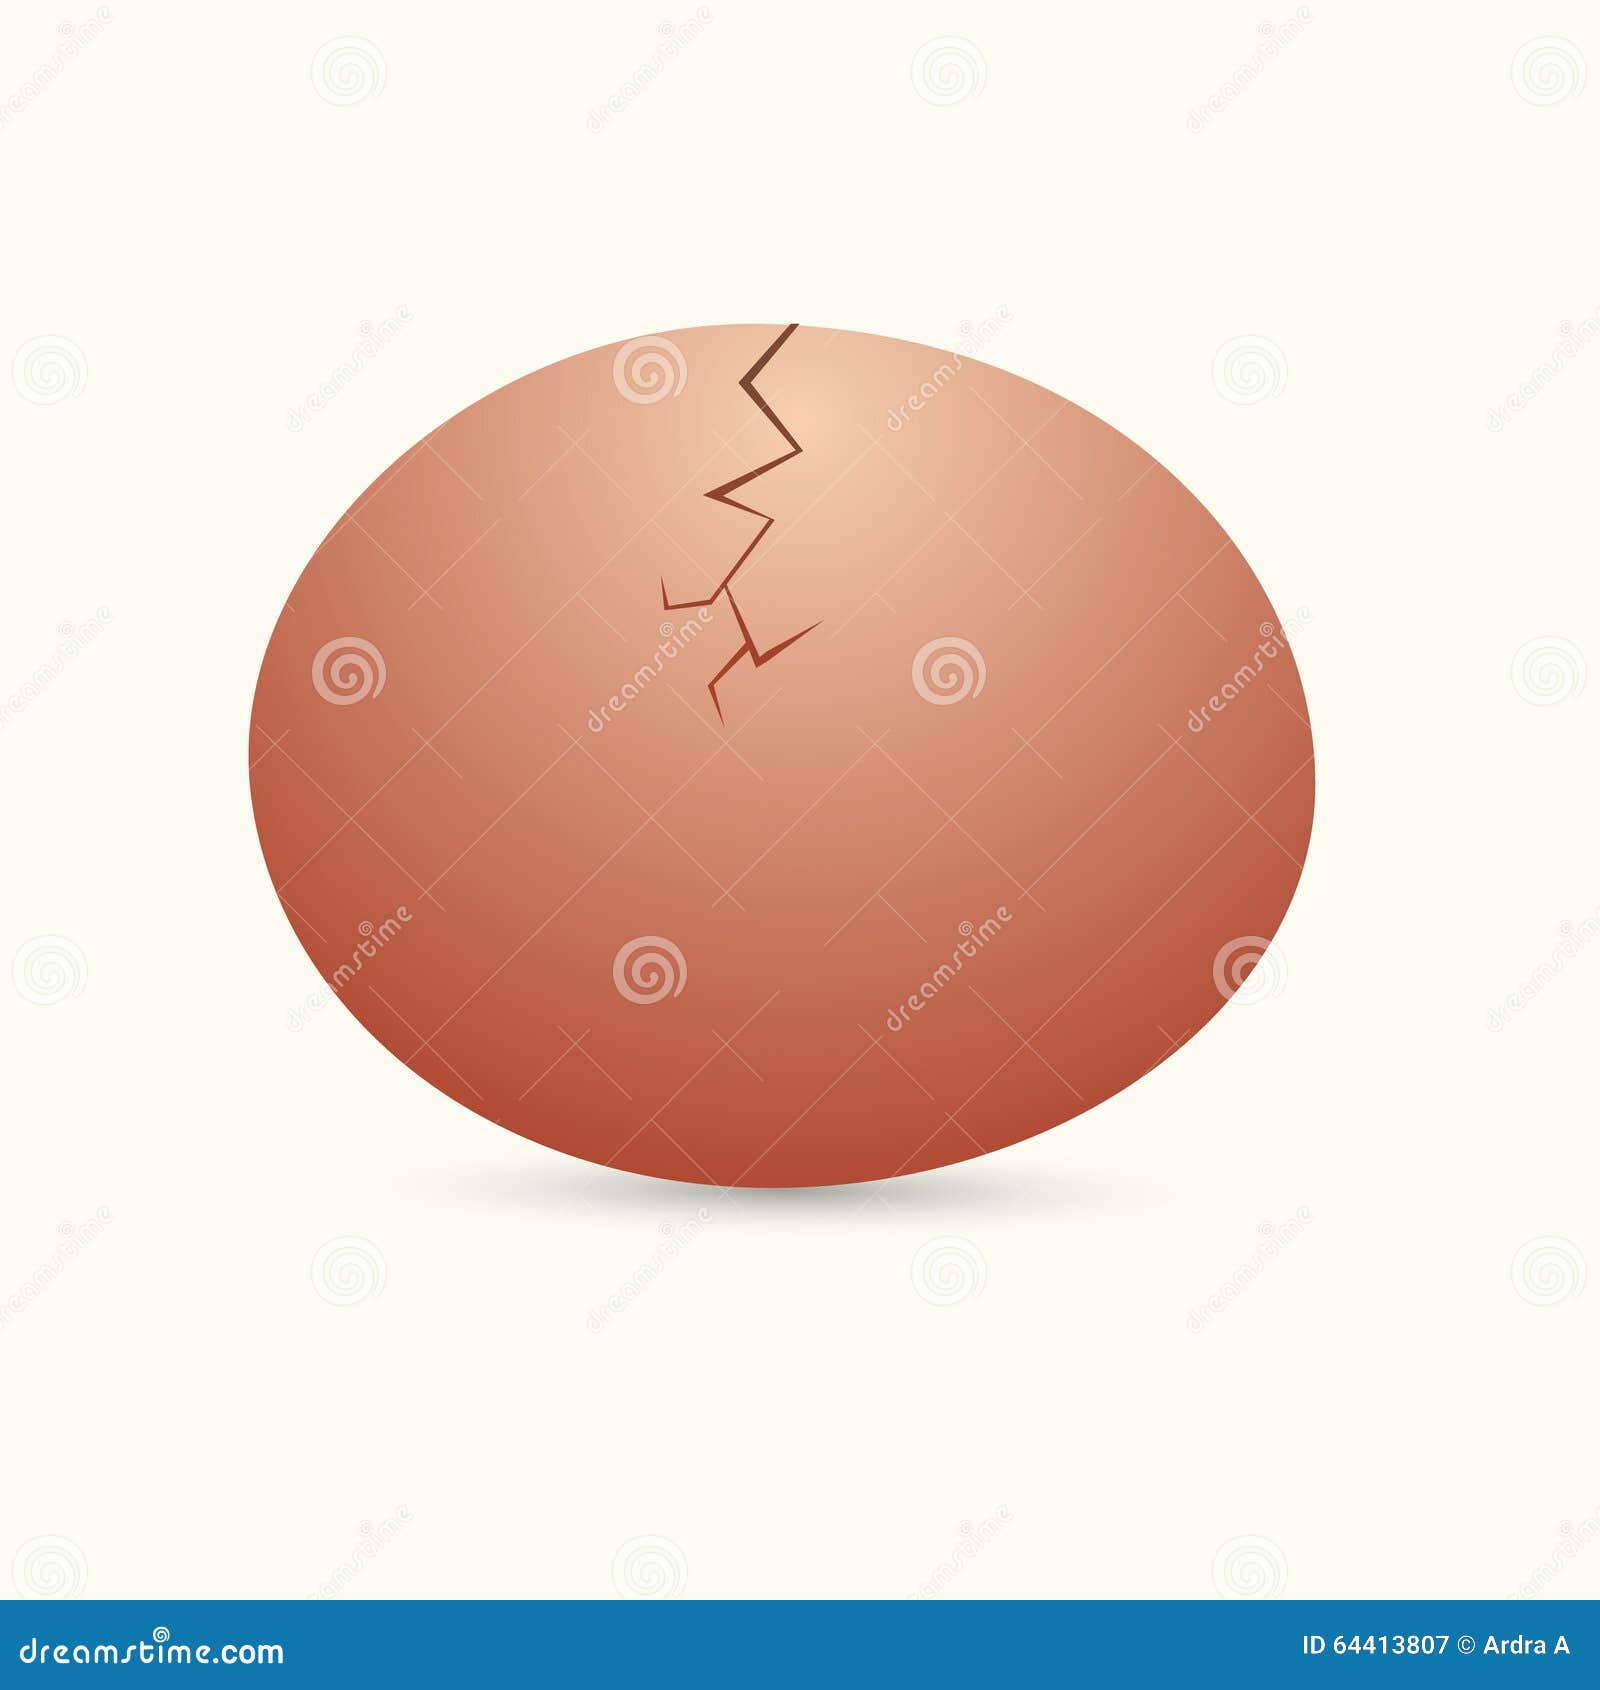 Cracked Egg illustration stock illustration. Illustration of